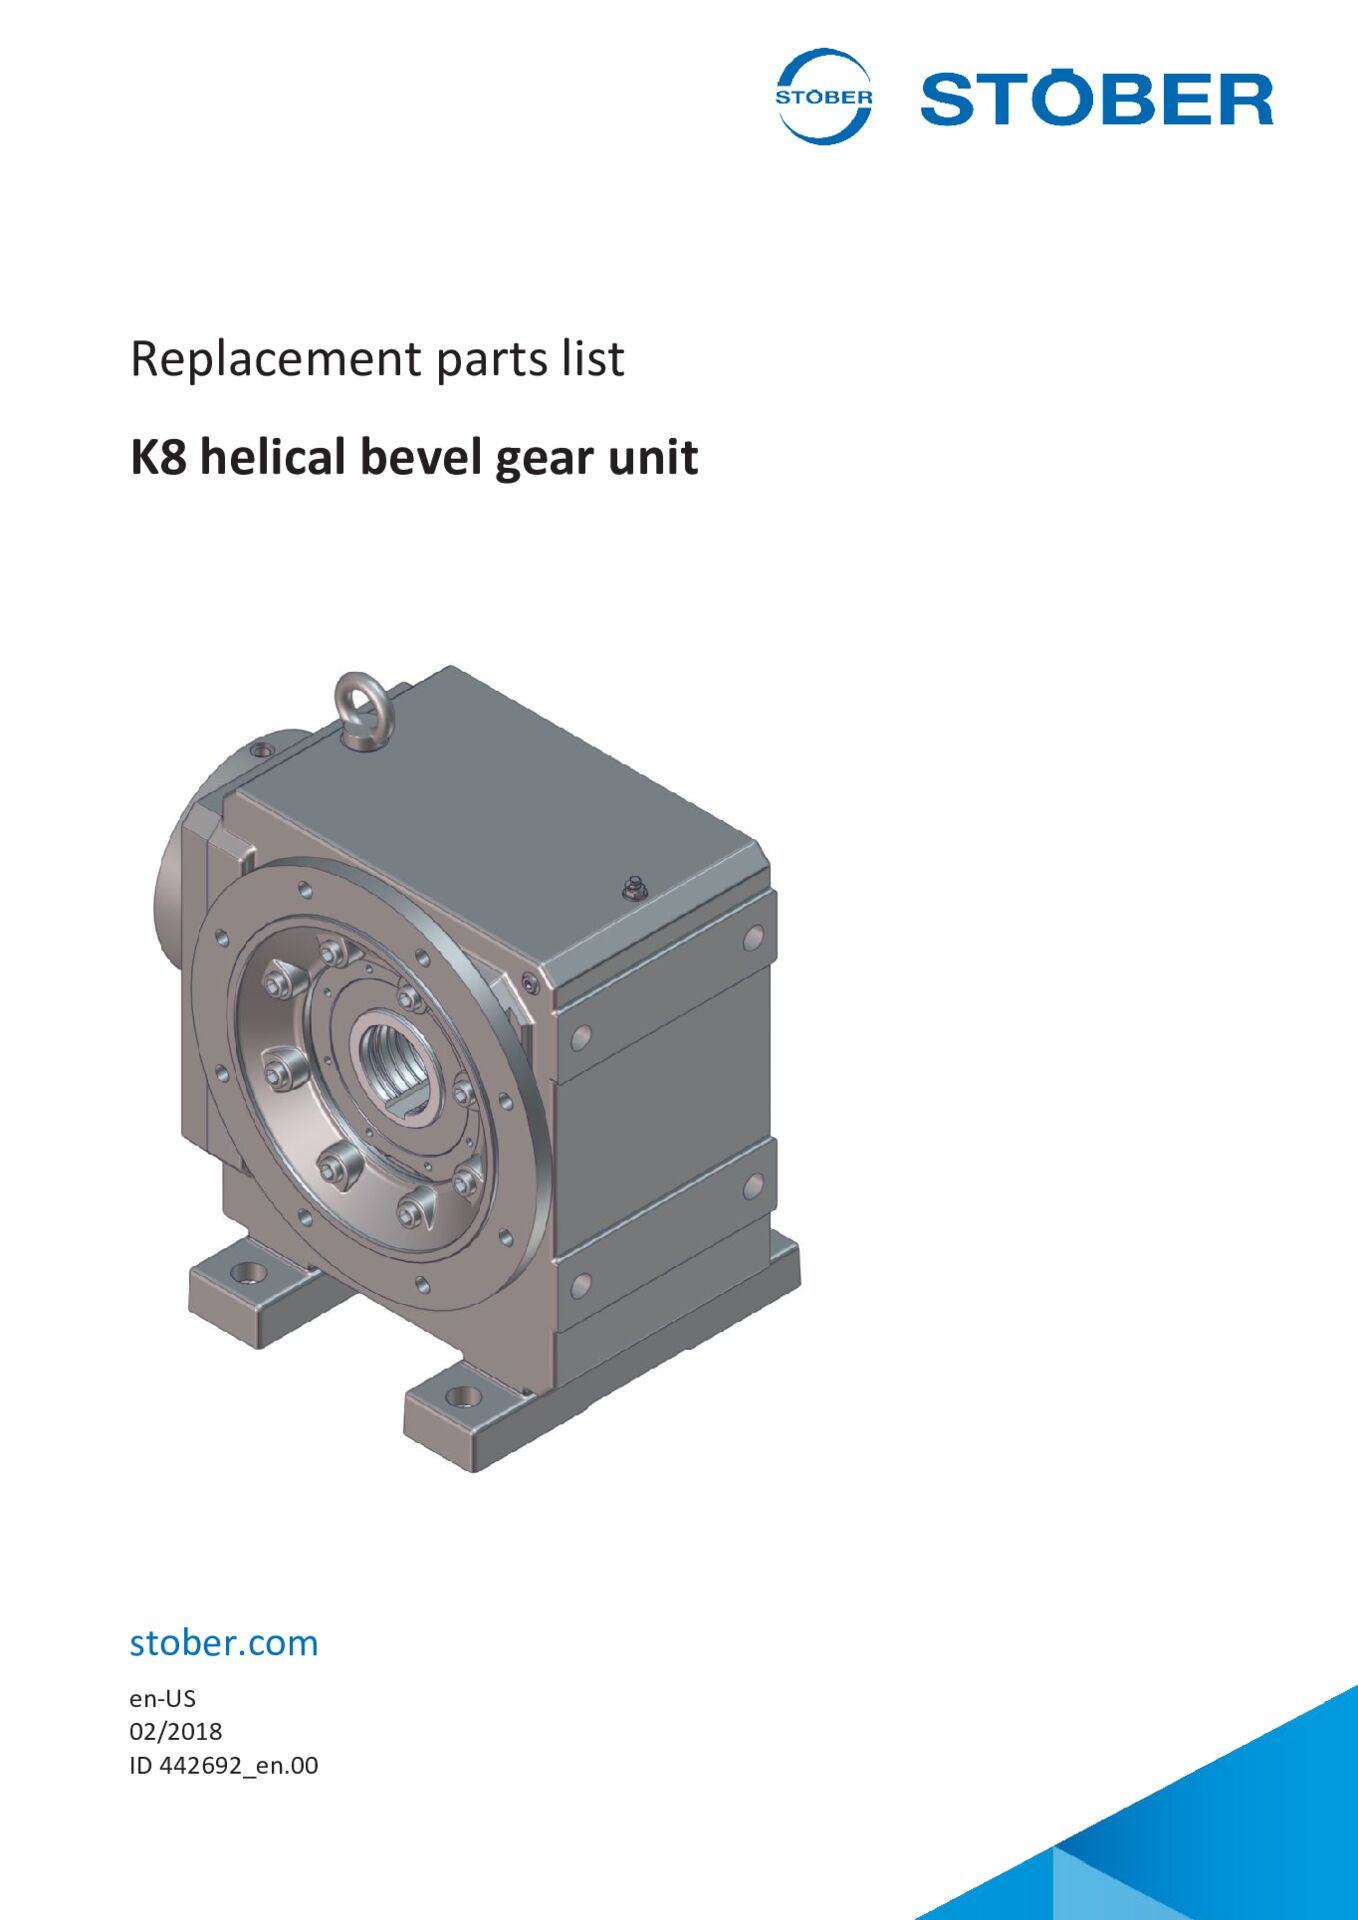 Replacement parts list K8 helical bevel gear unit